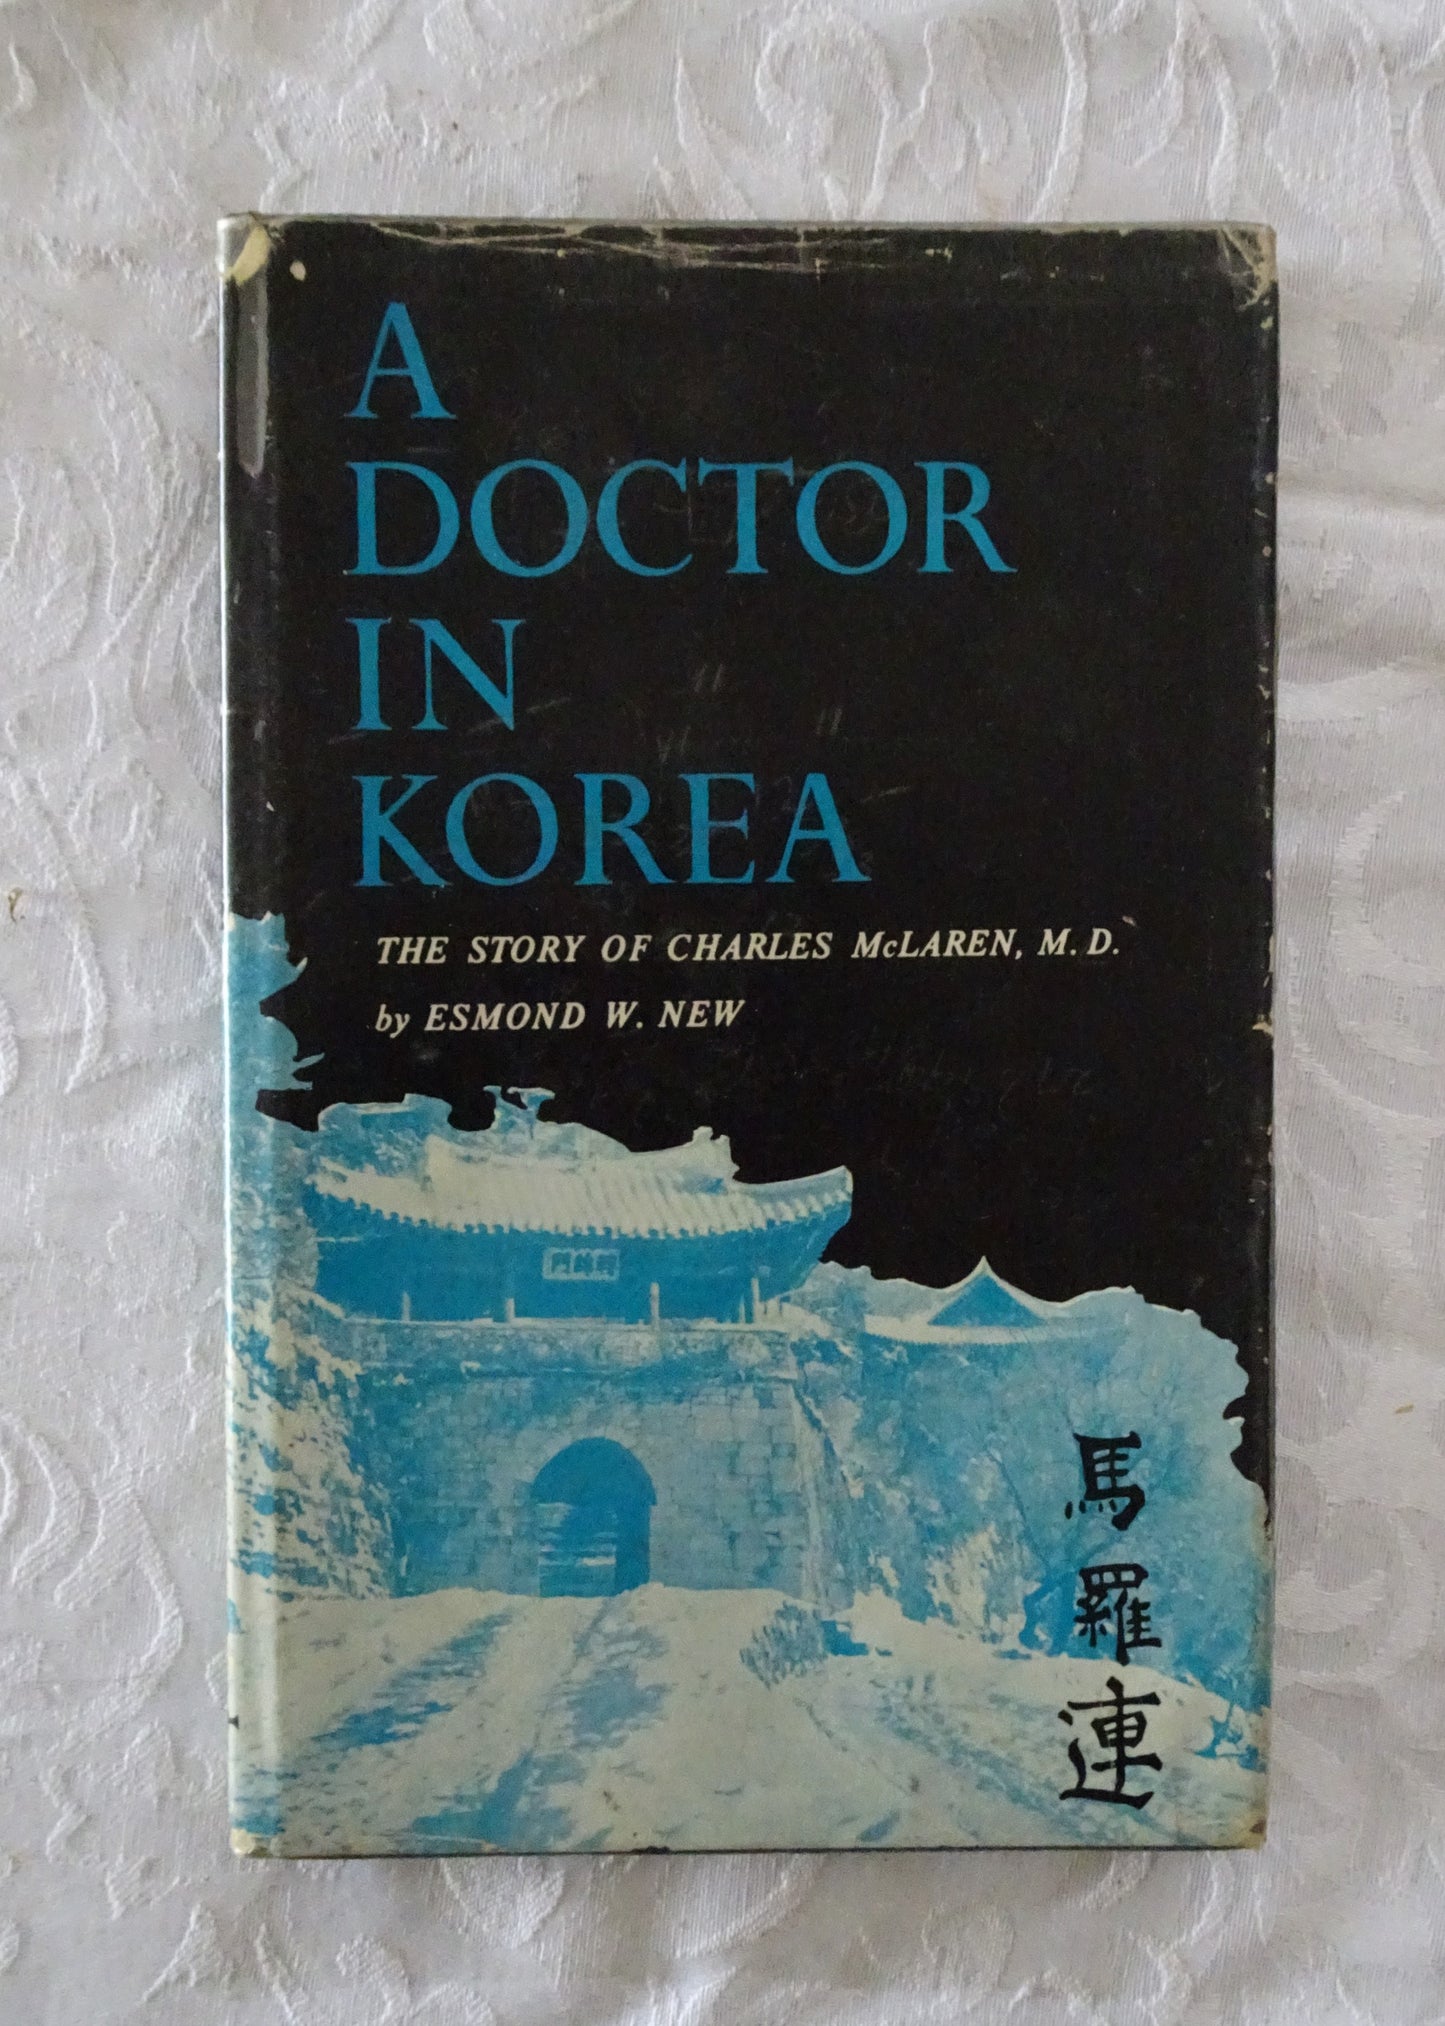 A Doctor In Korea by Esmond W. New